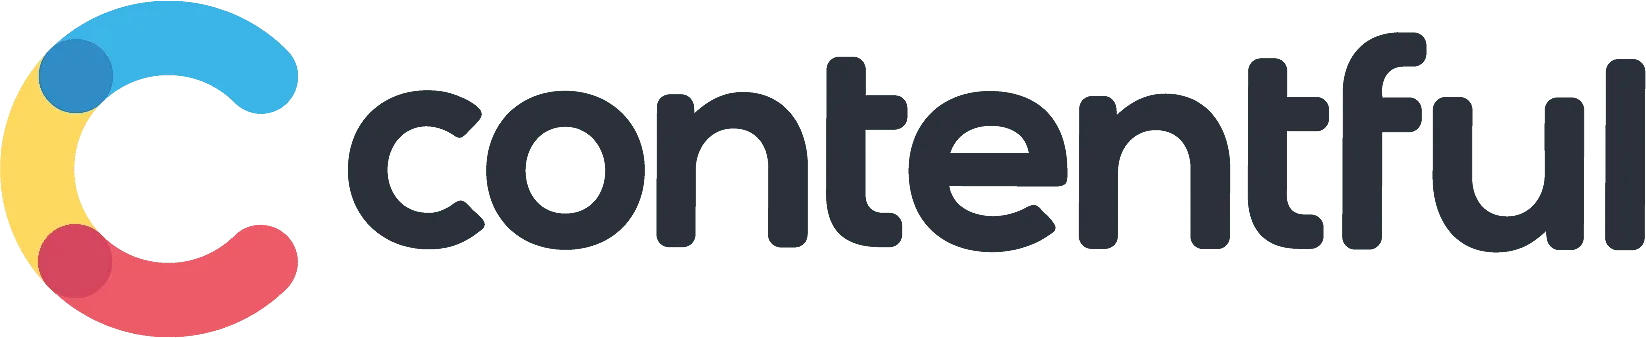 Contentful's logo